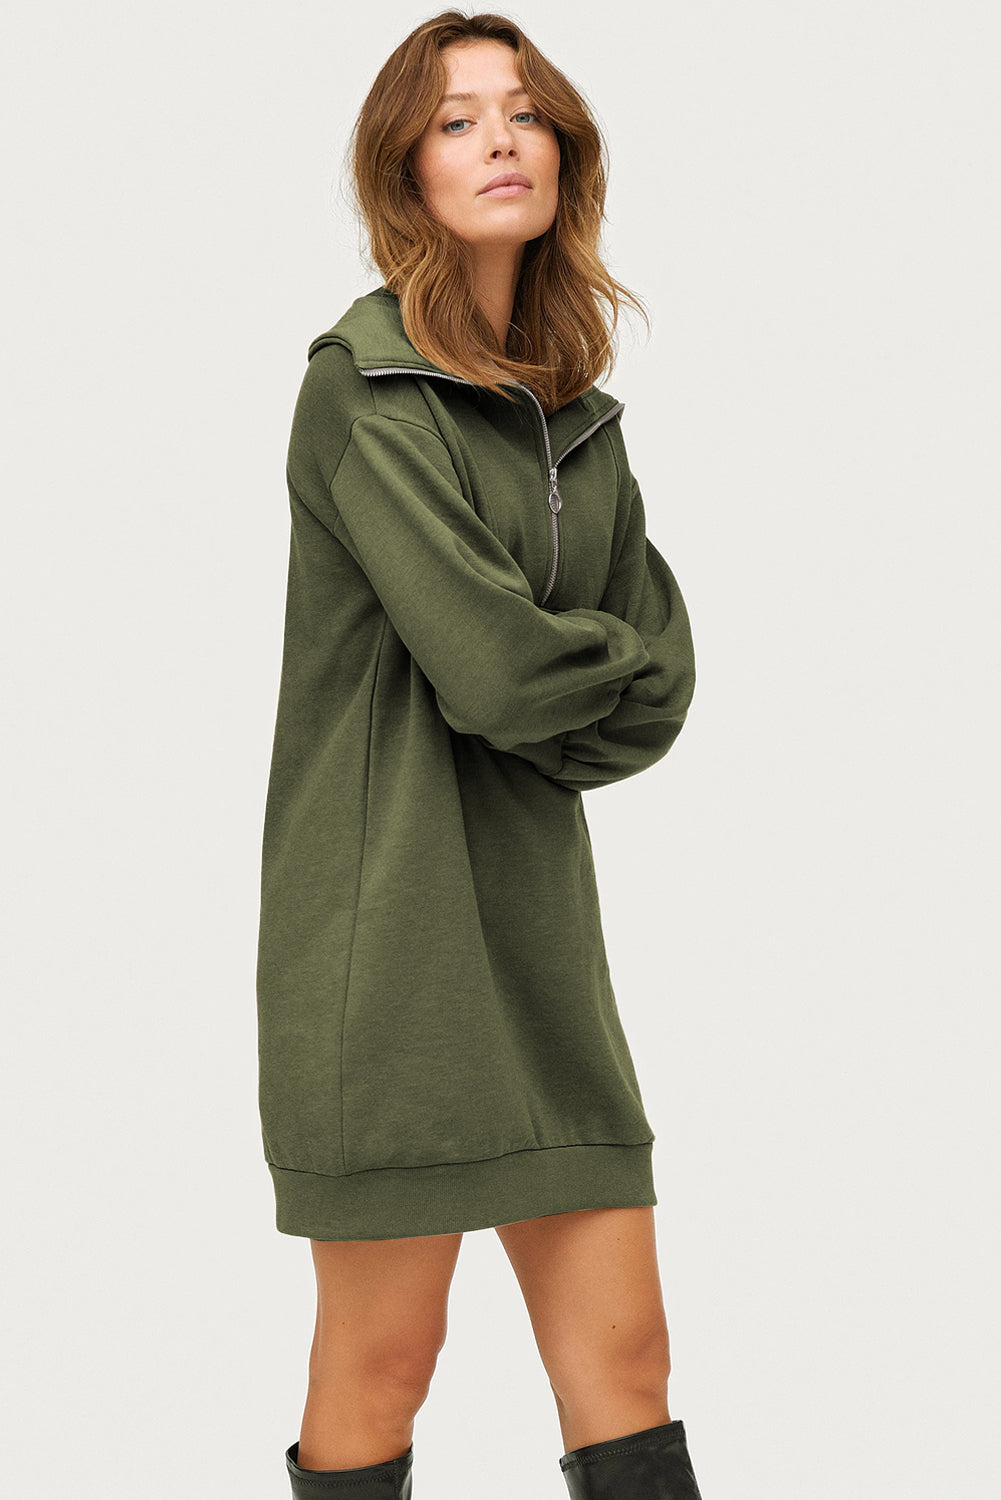 Green Solid Zipped Big Collar Sweatshirt Dress Dresses JT's Designer Fashion